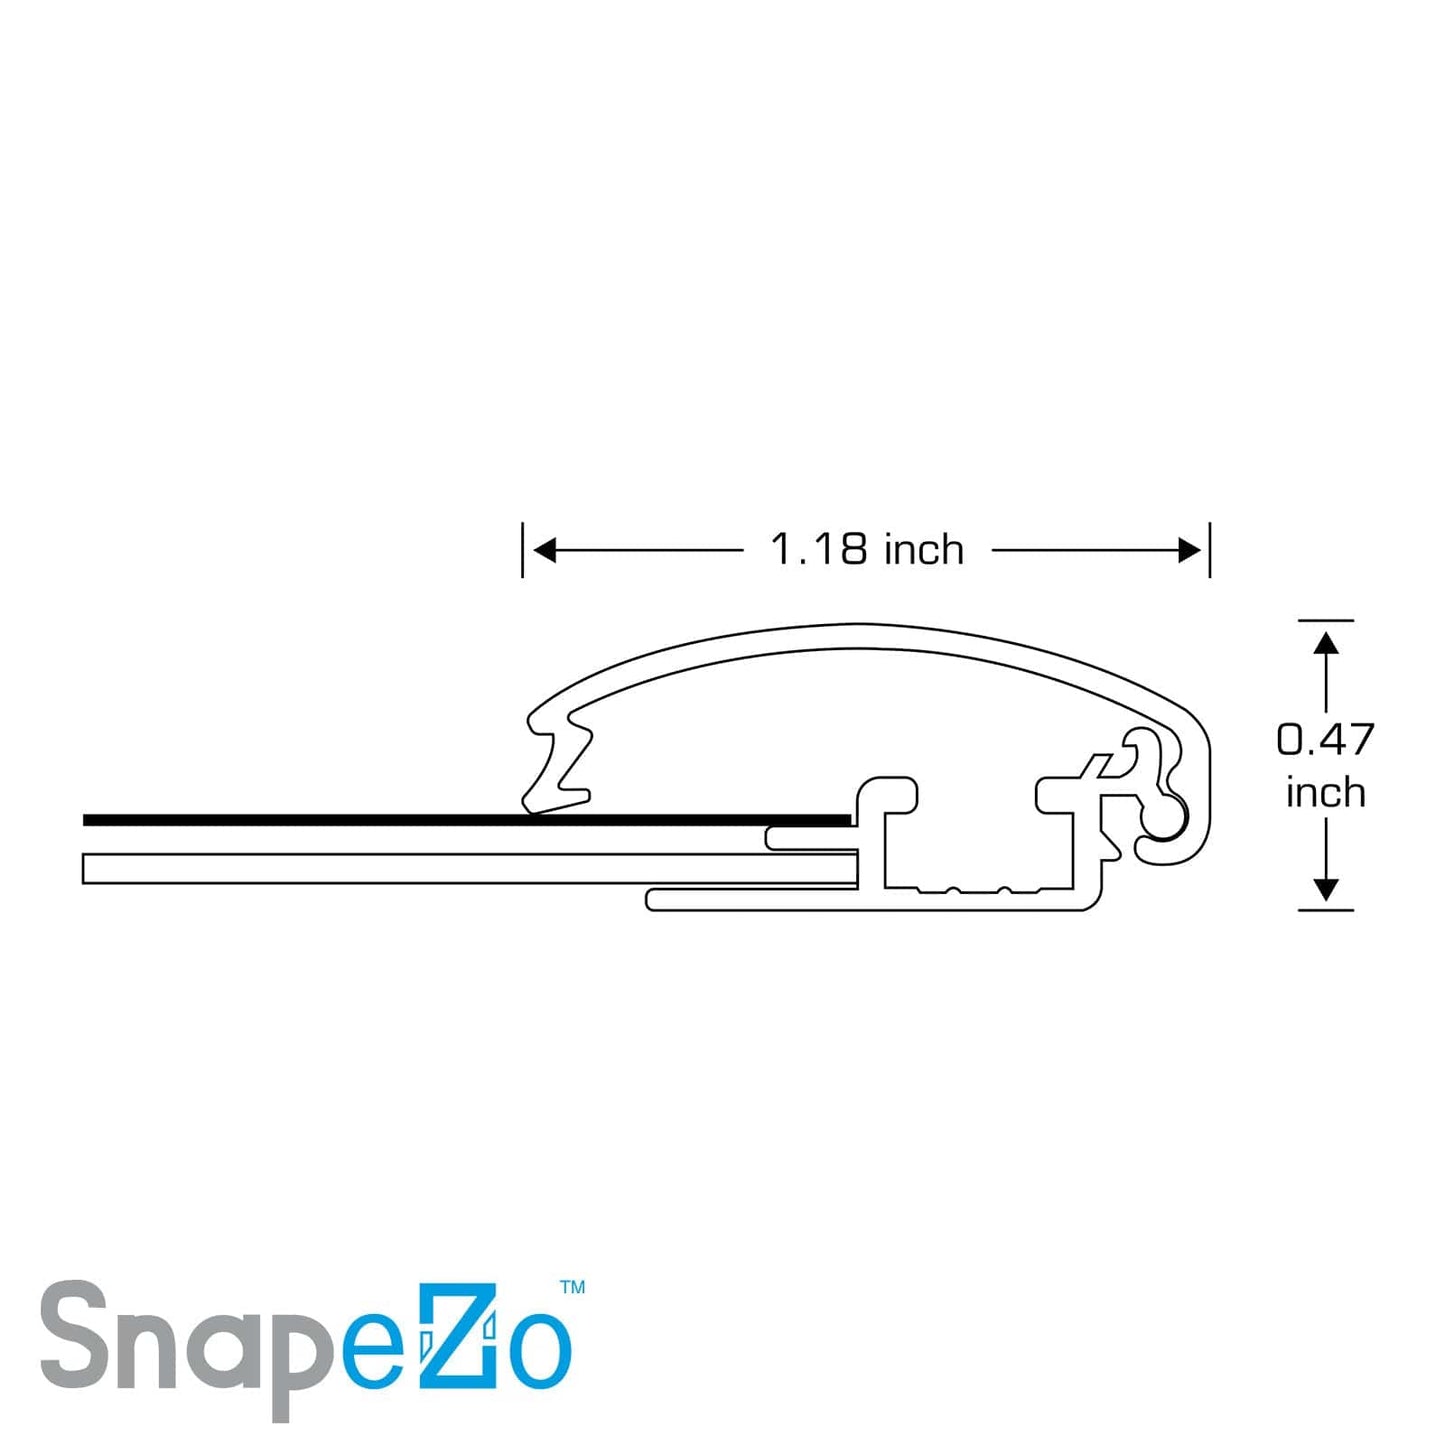 13.5x40 White SnapeZo® Snap Frame - 1.2" Profile - Snap Frames Direct